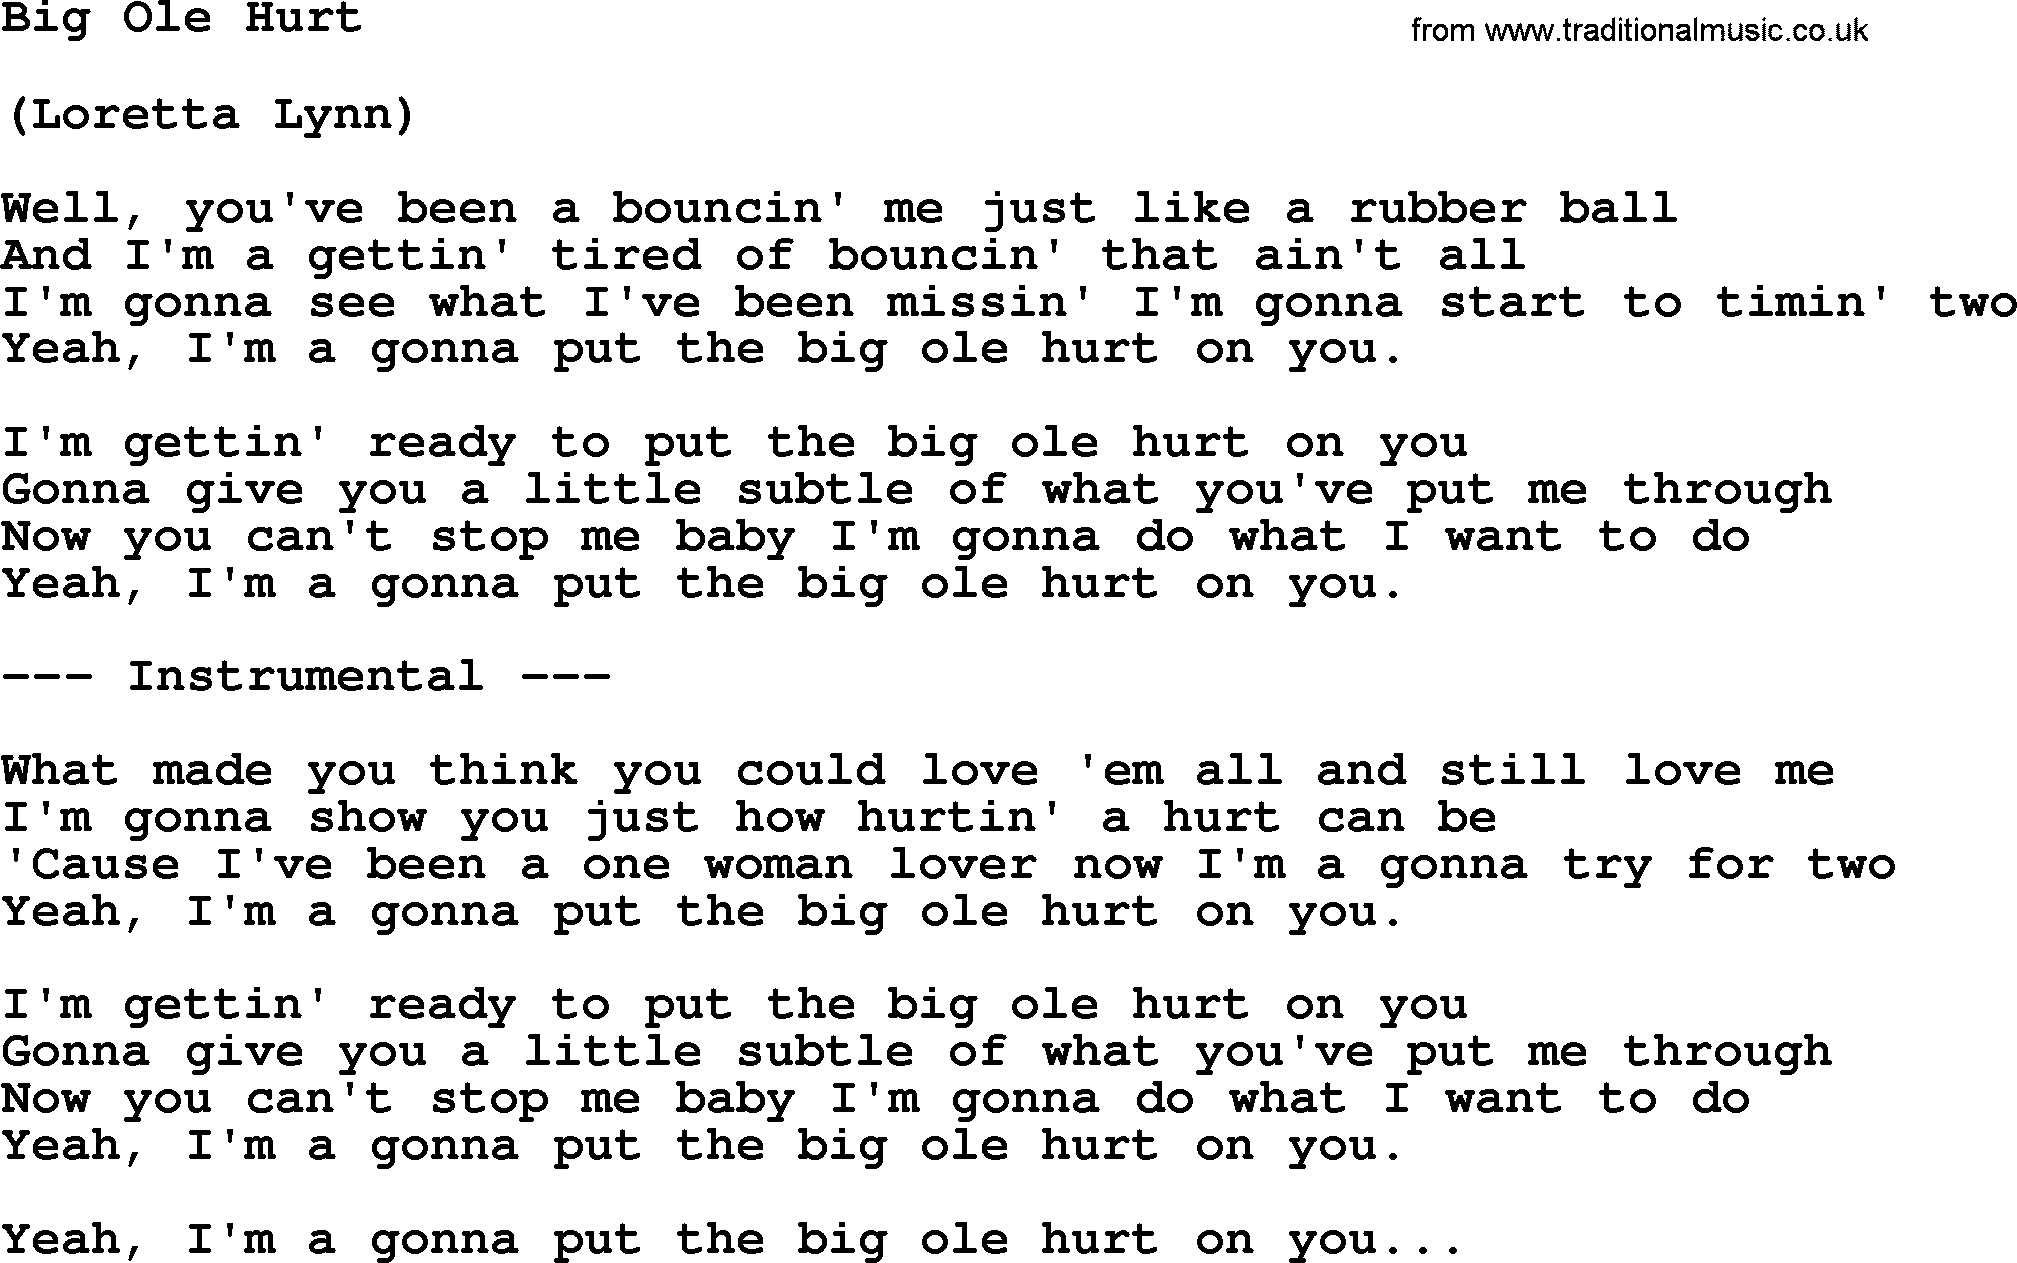 Loretta Lynn song: Big Ole Hurt lyrics